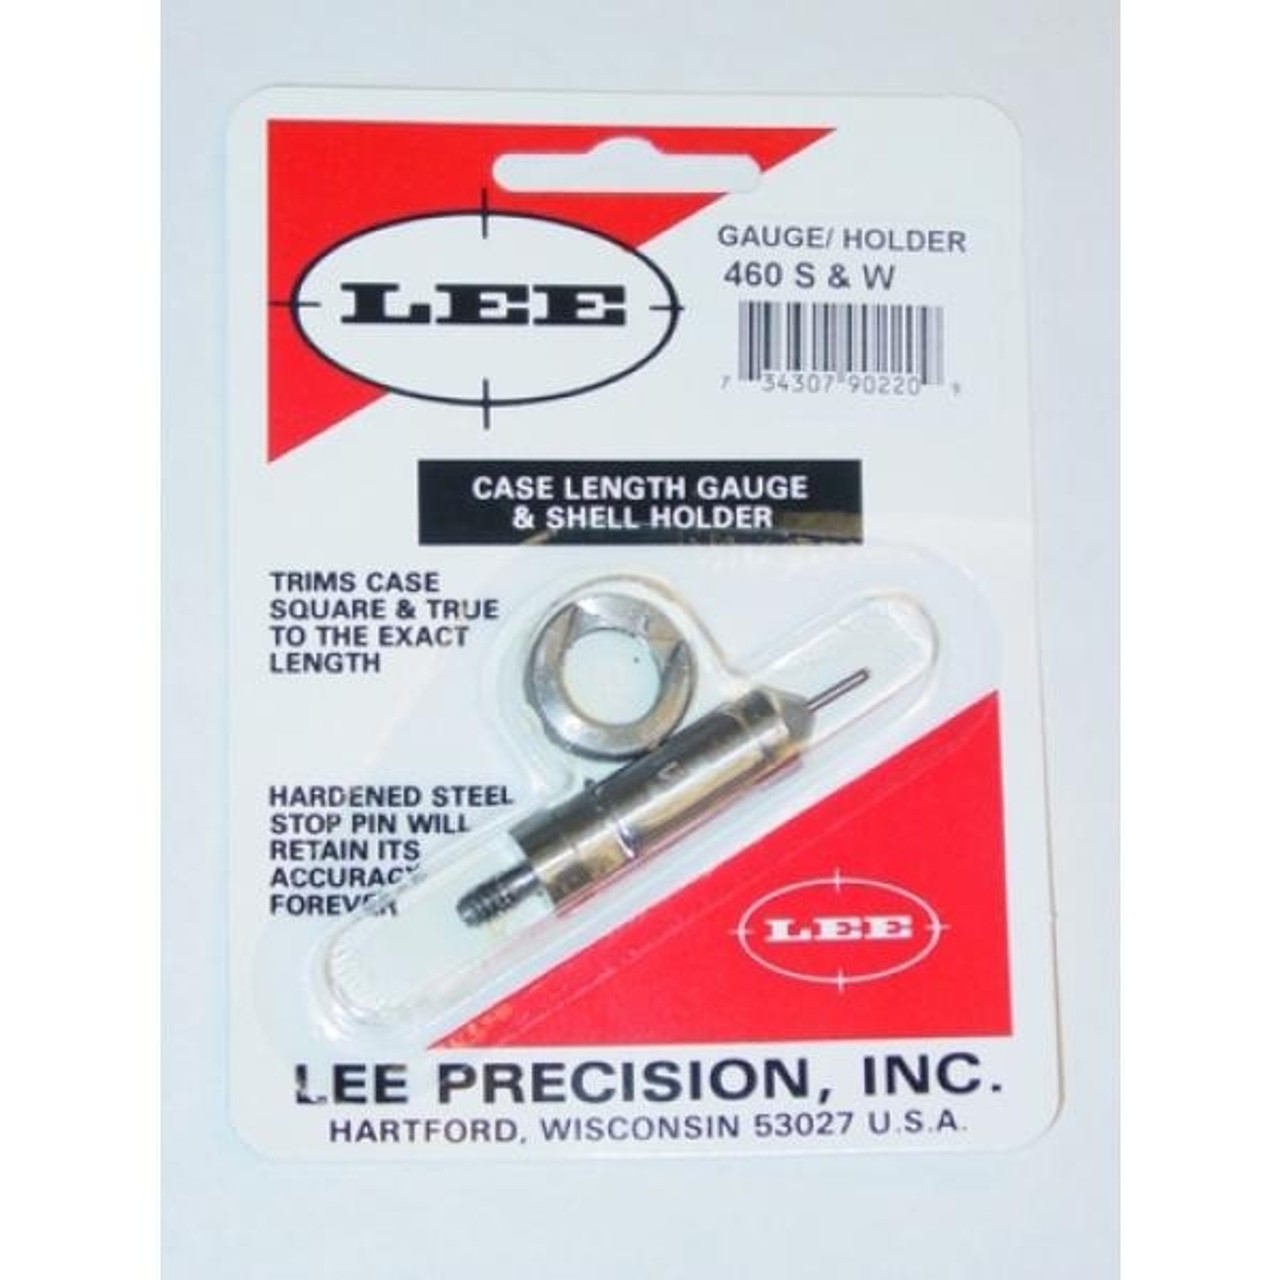 Lee Precision 460 S&W CASE GAUGE & SHELL HOLDER